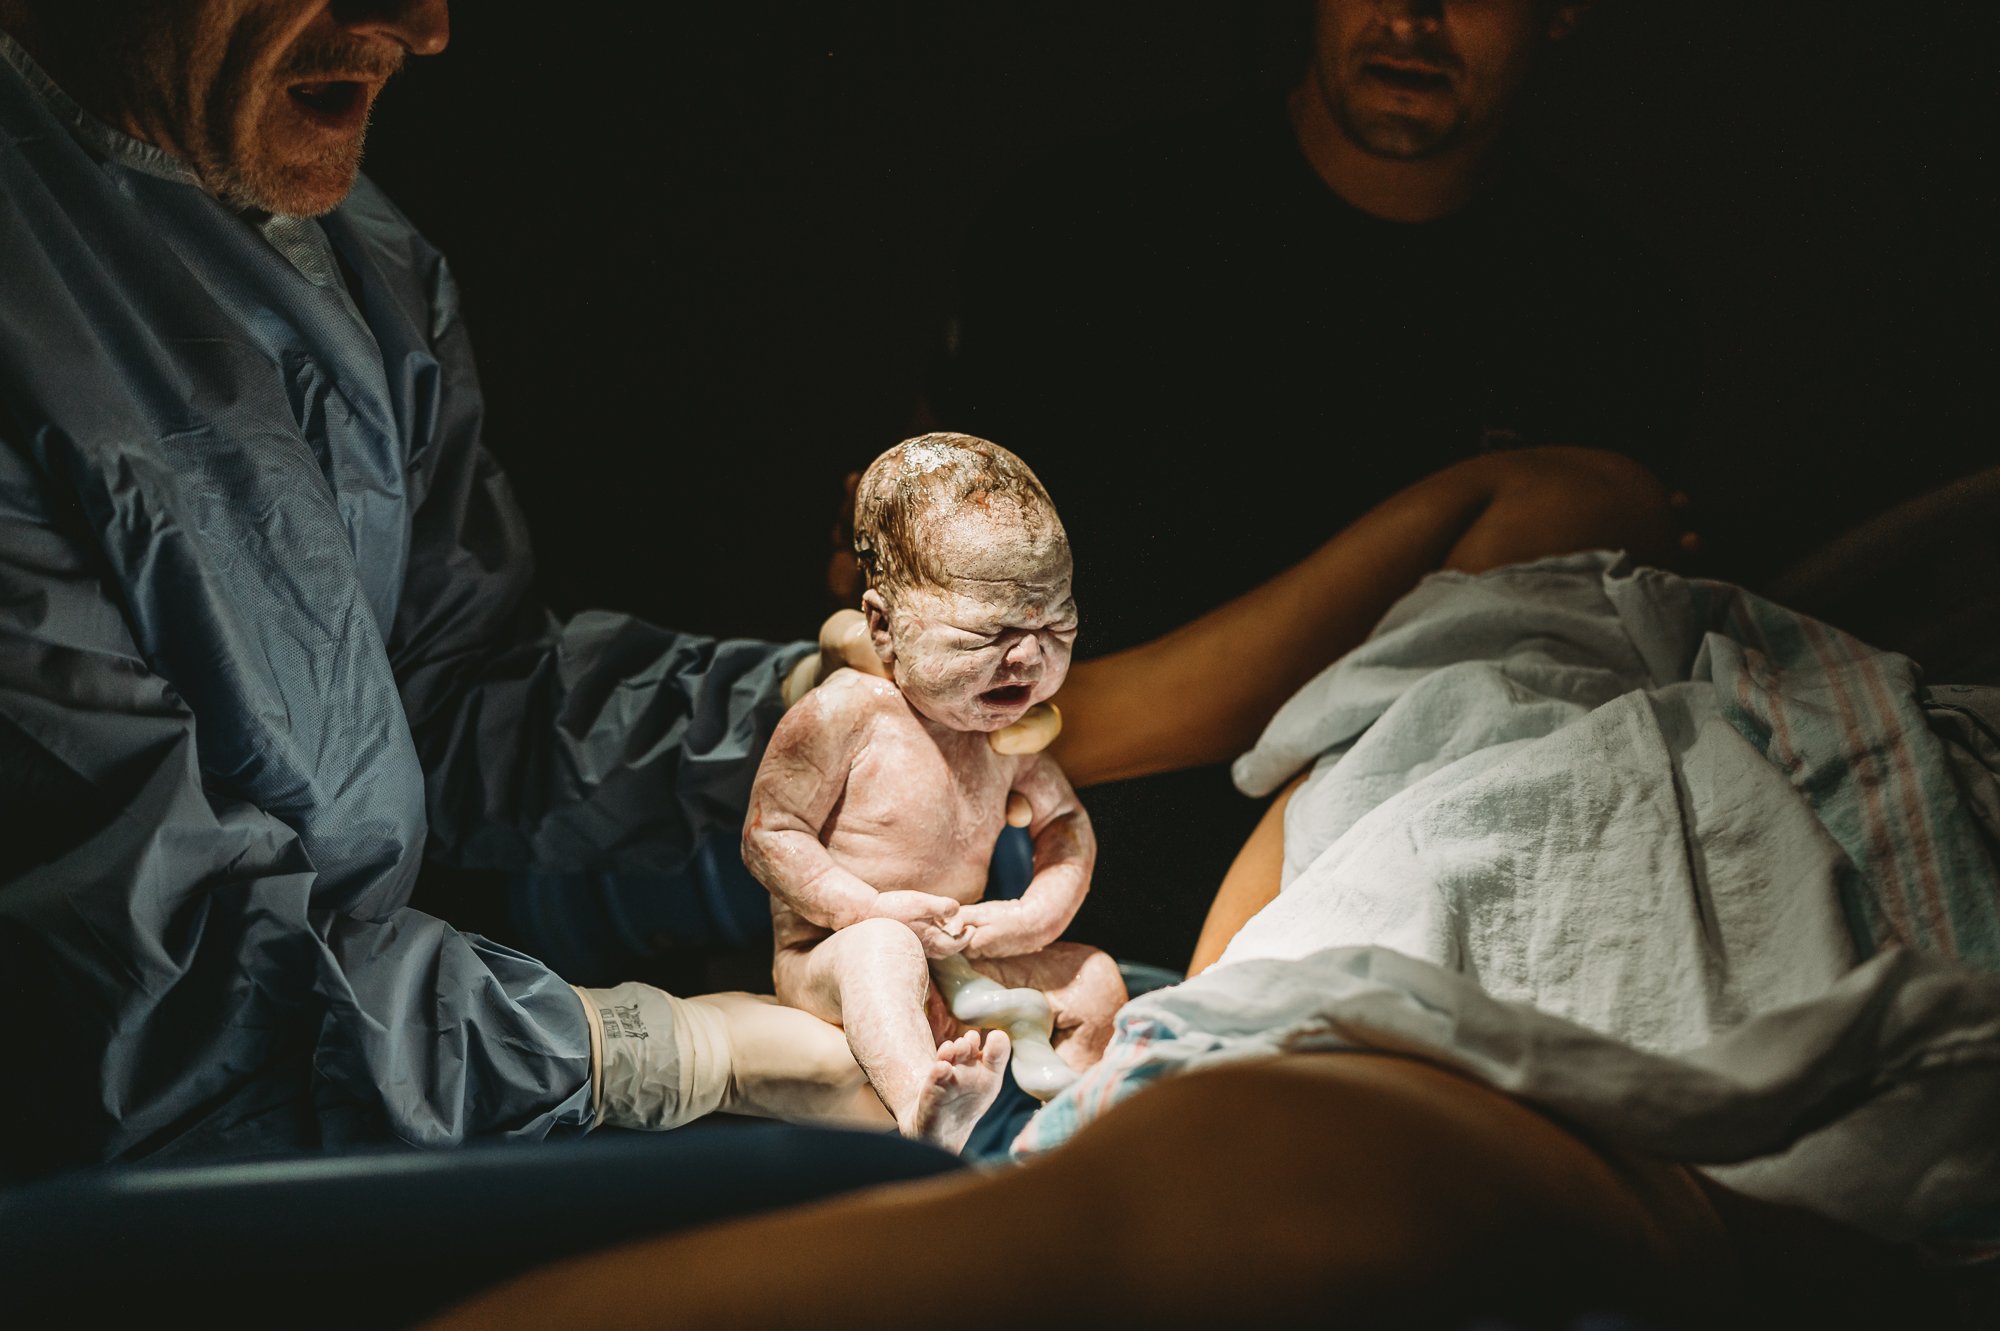 Hospital-birth-photography-kapiolani-honolulu-oahu-birth-dr-foley-epidural-mom-labors-with-support-husband-sarah-elizabeth-photos-and-film-oahu-birth-photographer-5135.jpg